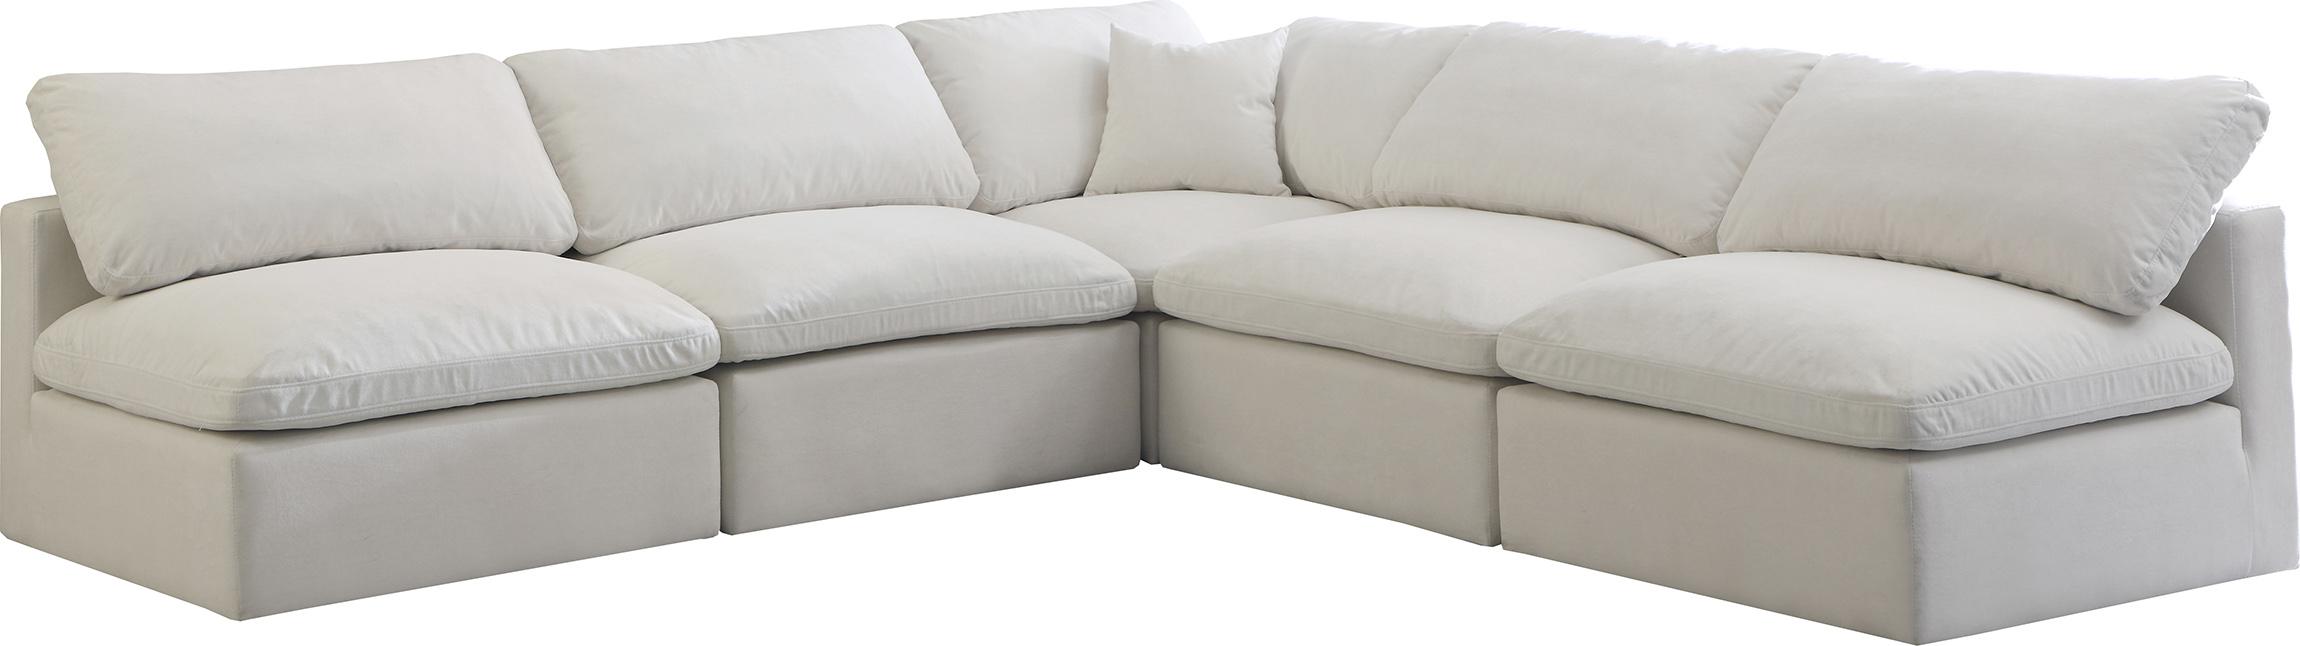 Contemporary, Modern Modular Sectional Sofa 602Cream-Sec5B 602Cream-Sec5B in Cream Fabric